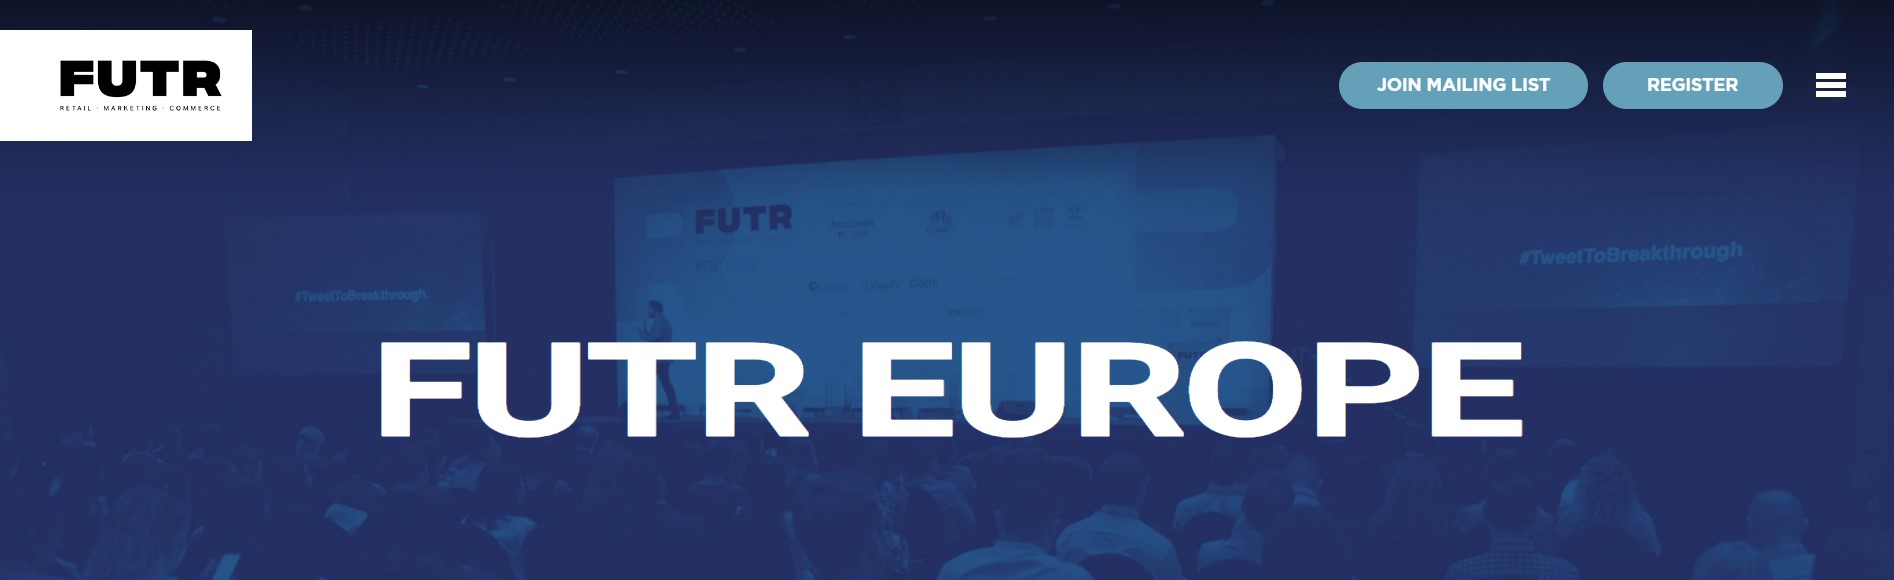 FOMO Pay shortlisted in FUTR European RetailTech Top 50 2018